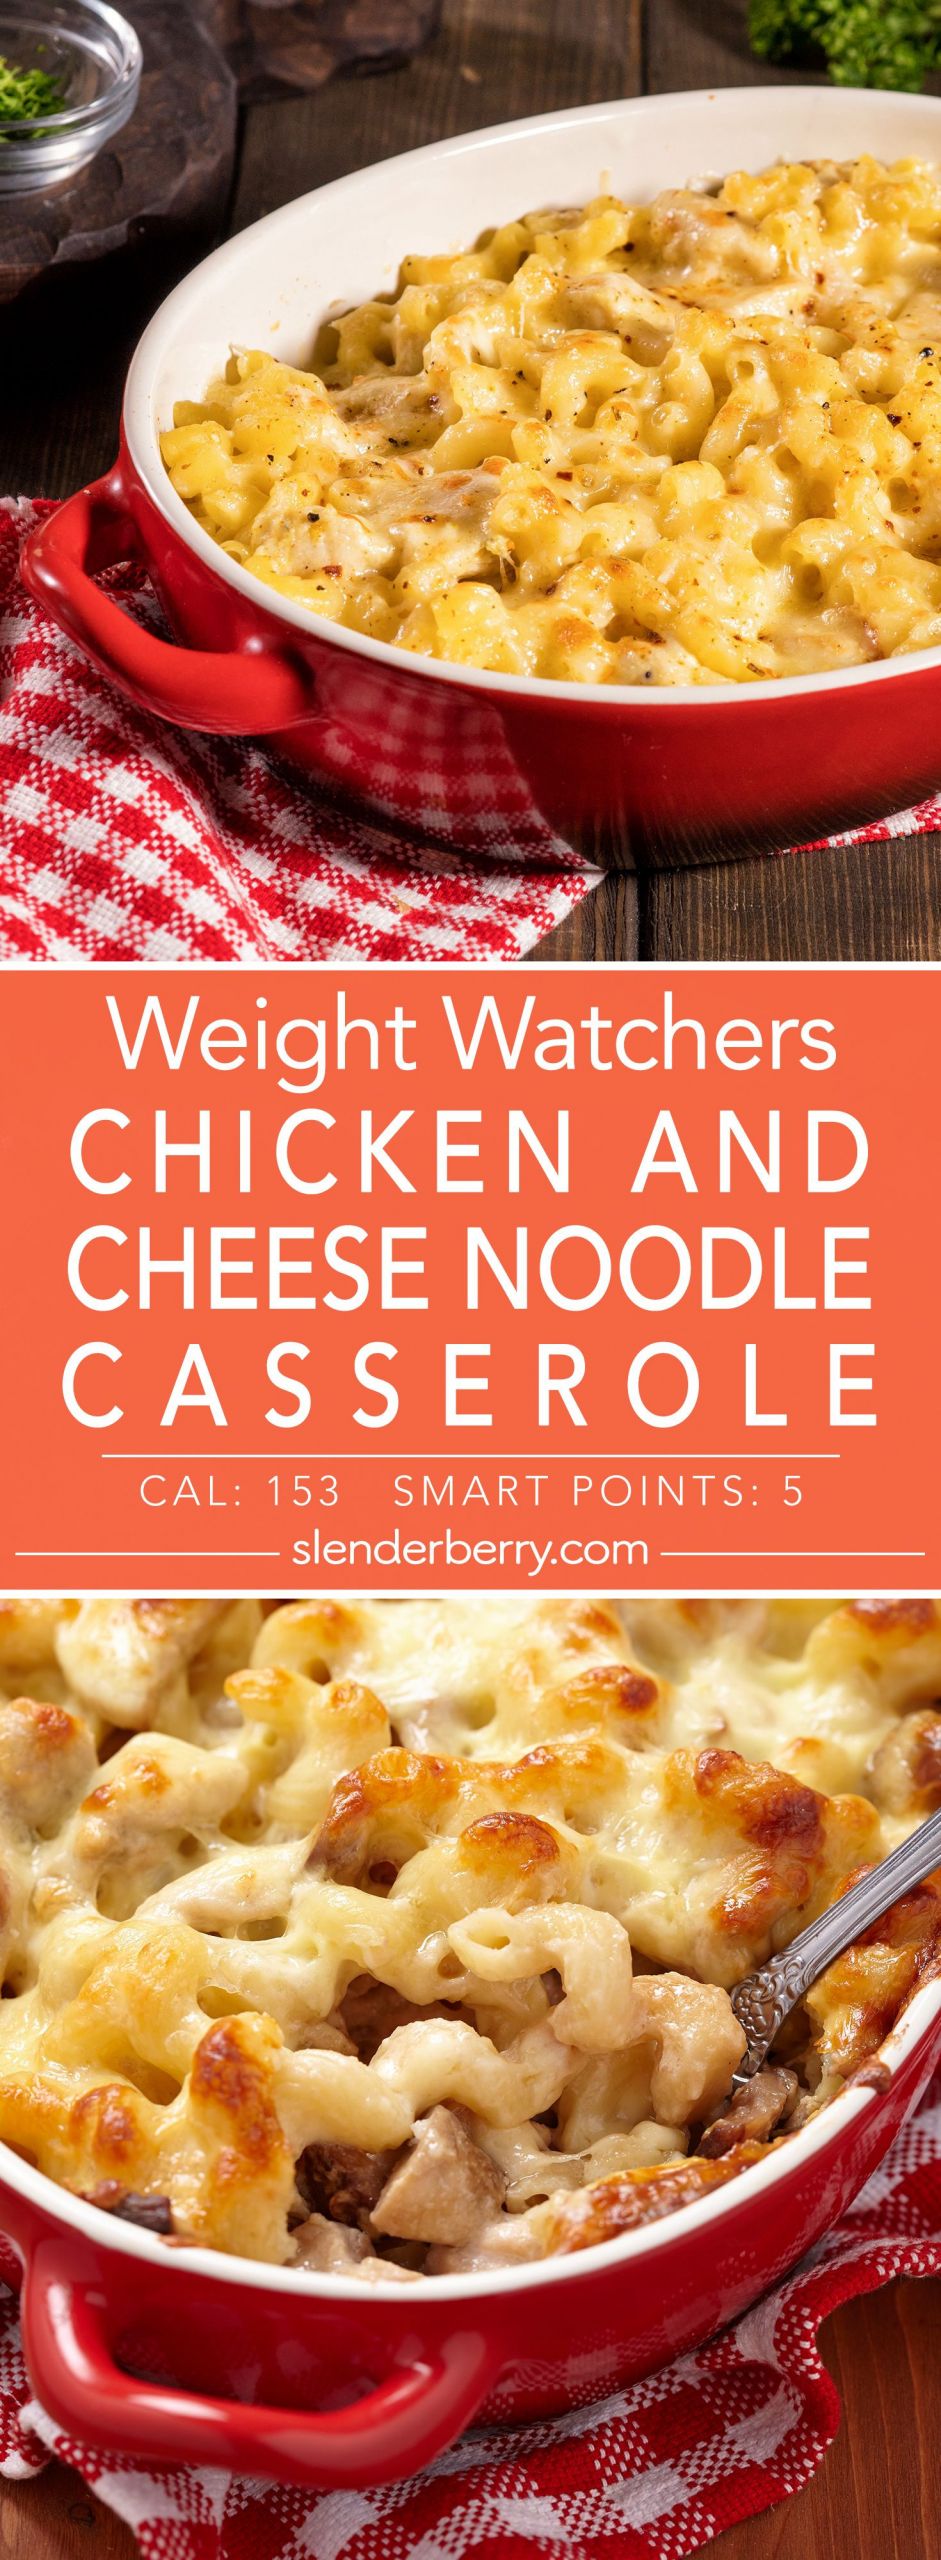 Weight Watchers Chicken And Cheese Casserole
 Chicken and Cheese Noodle Casserole Recipe